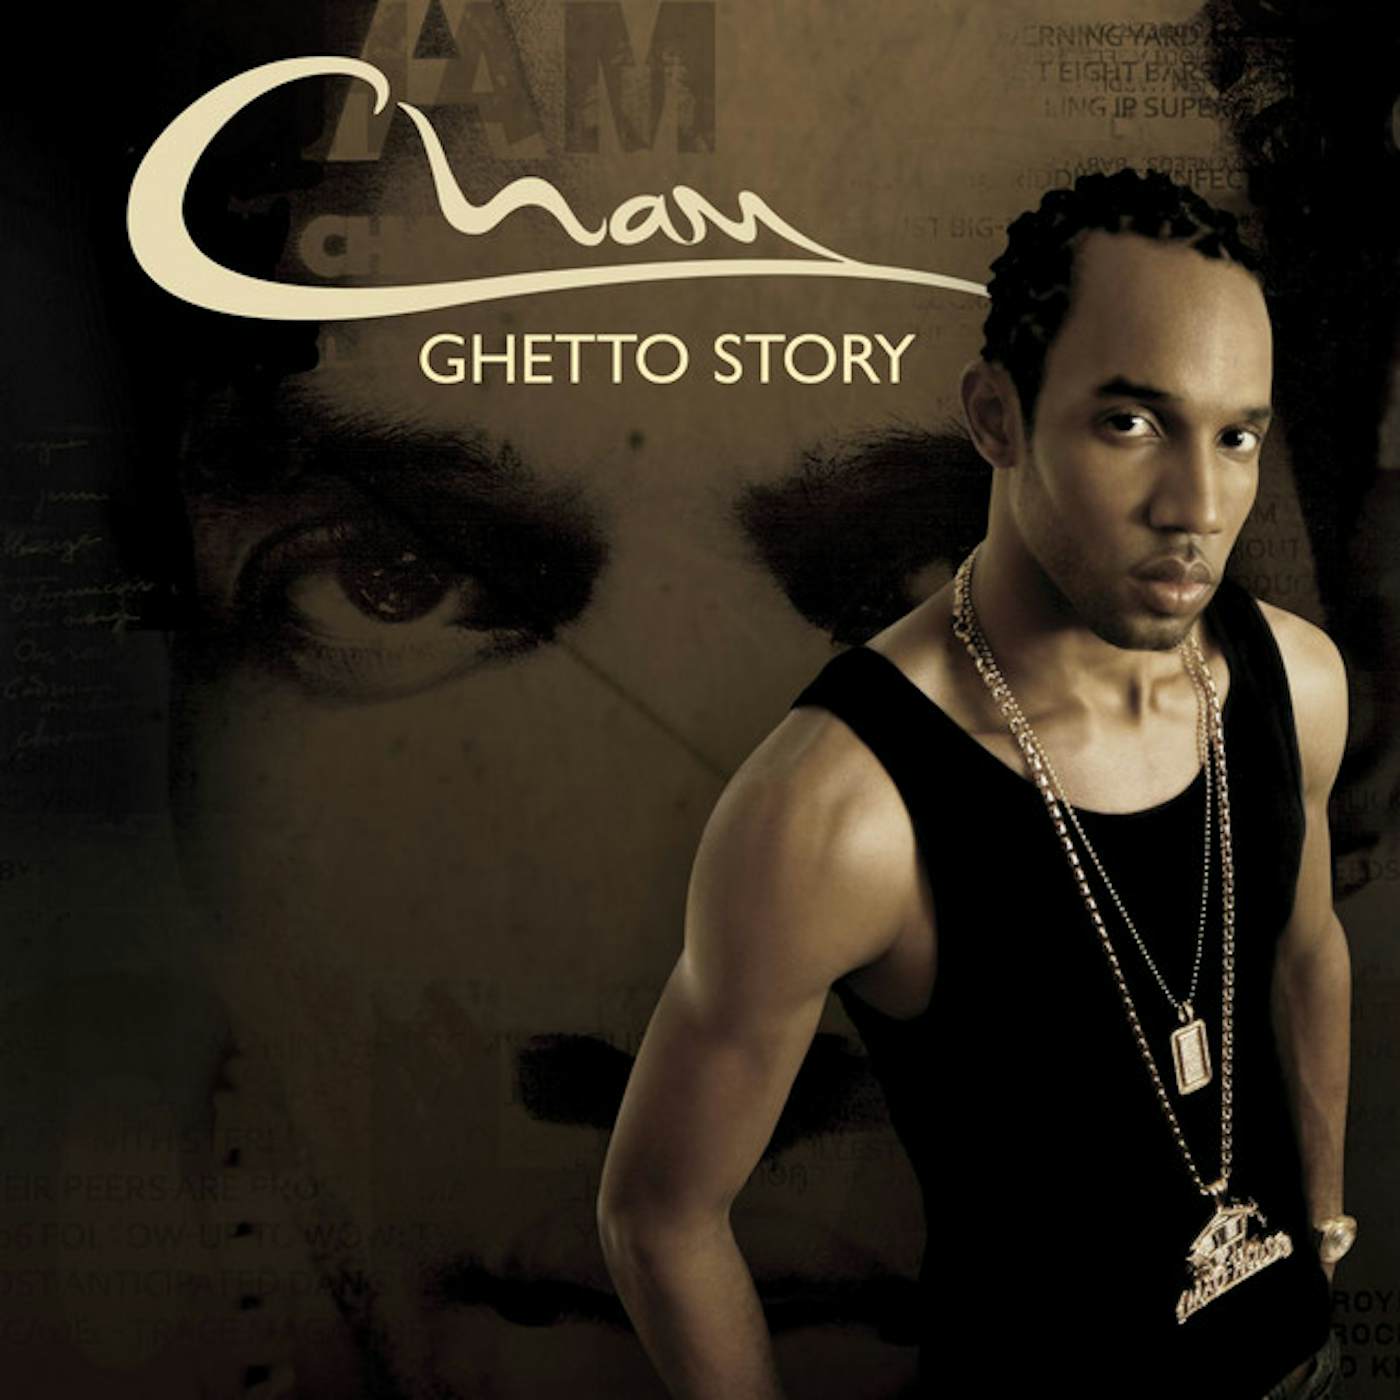 Cham GHETTO STORY CD